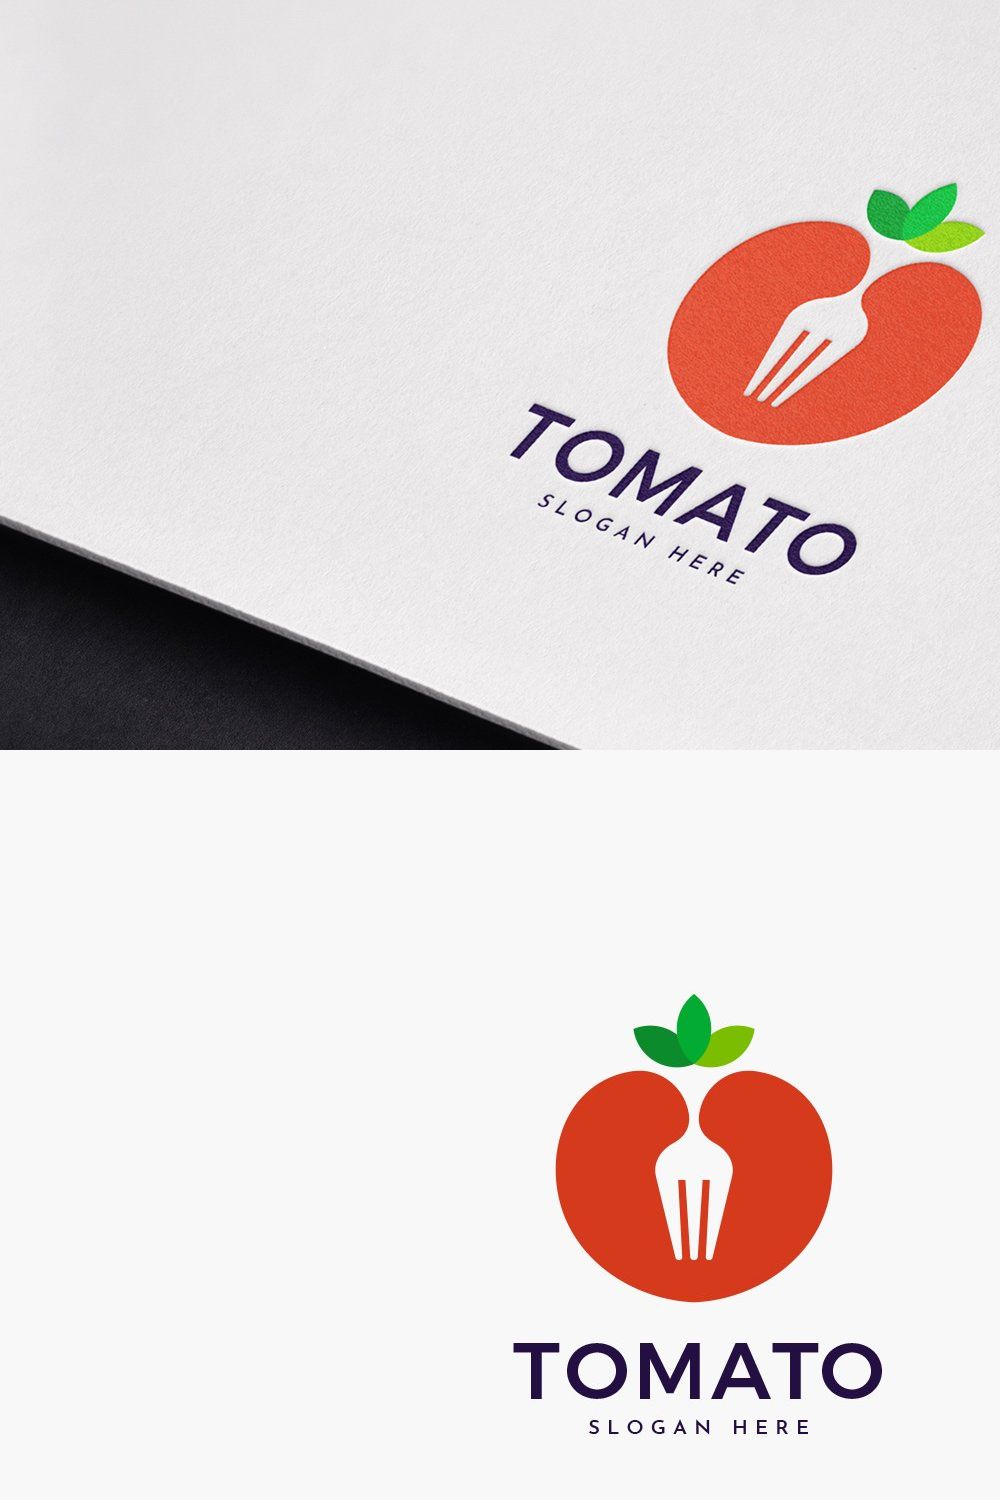 Tomato & Fork Logo Template pinterest preview image.